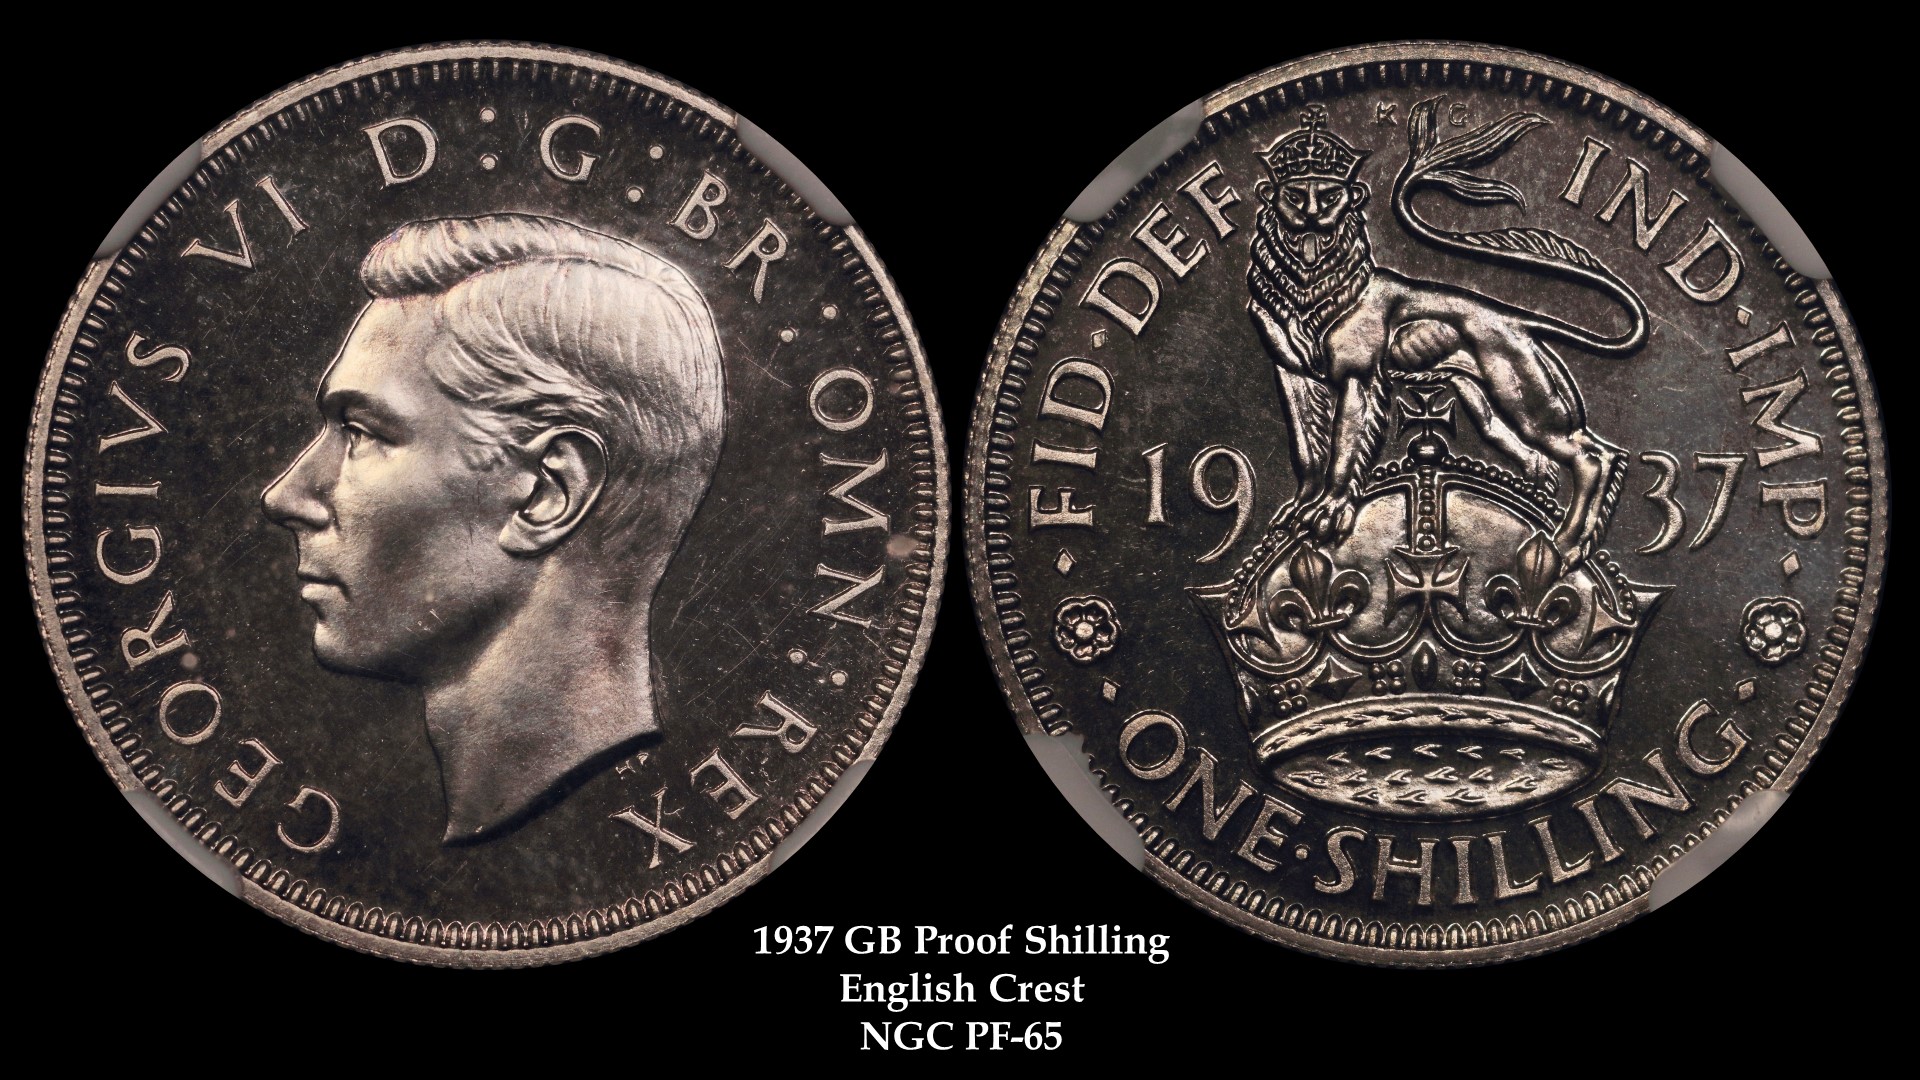 1937 GB Shilling Proof English Crest PF-65 3813720002.jpg